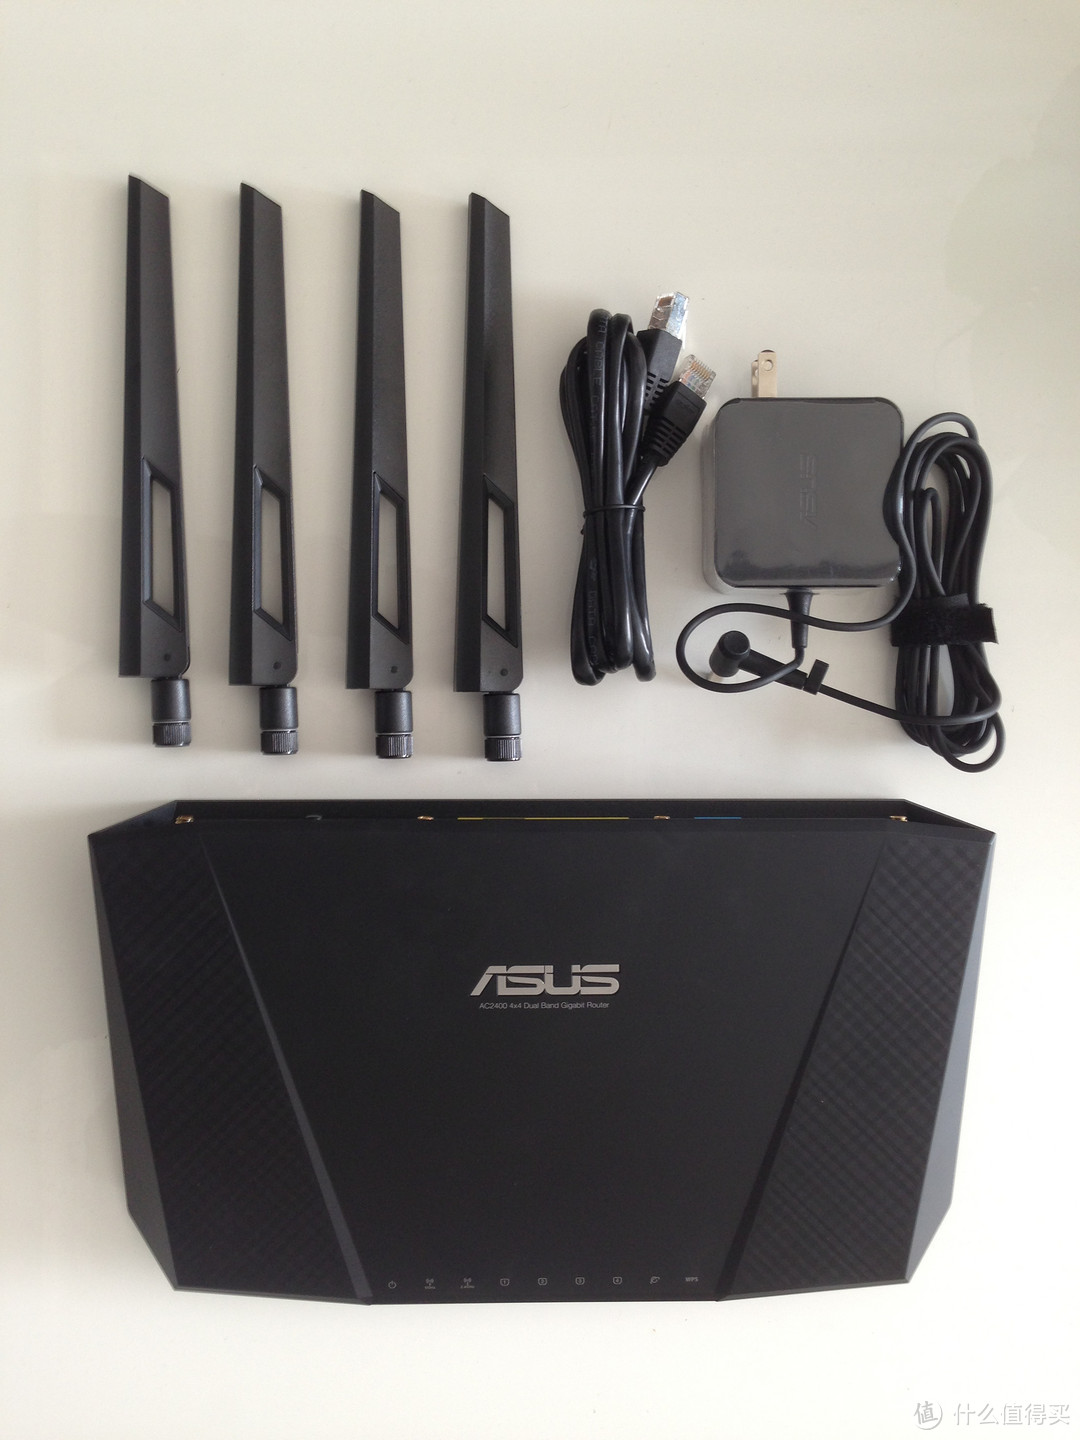 ASUS 华硕 RT-AC87U Wireless-AC2400 Dual Band Gigabit 旗舰路由器